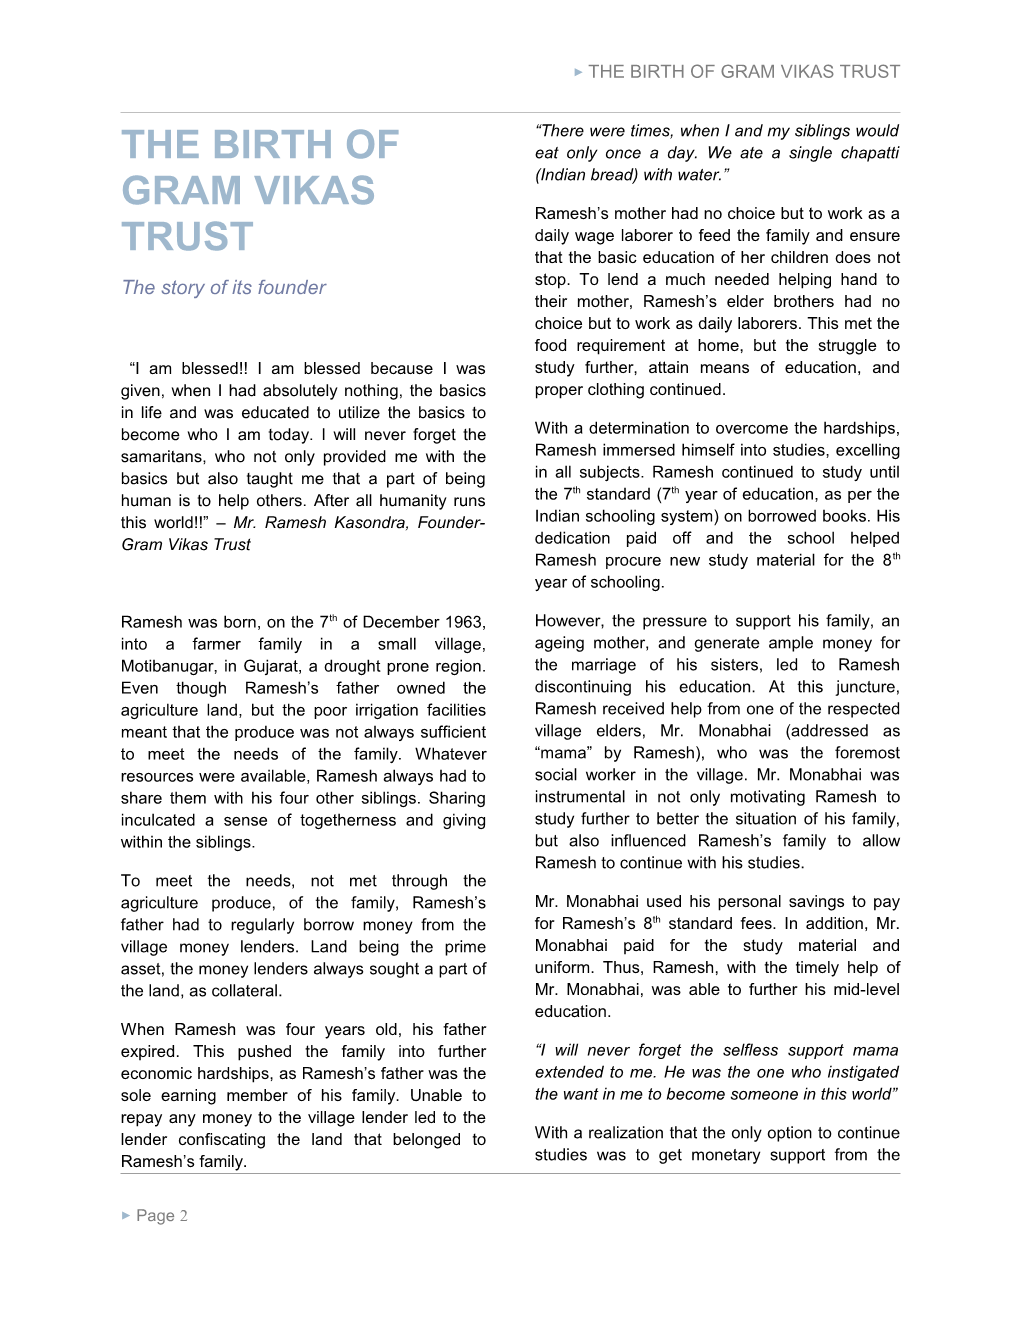 The Birth of Gram Vikas Trust